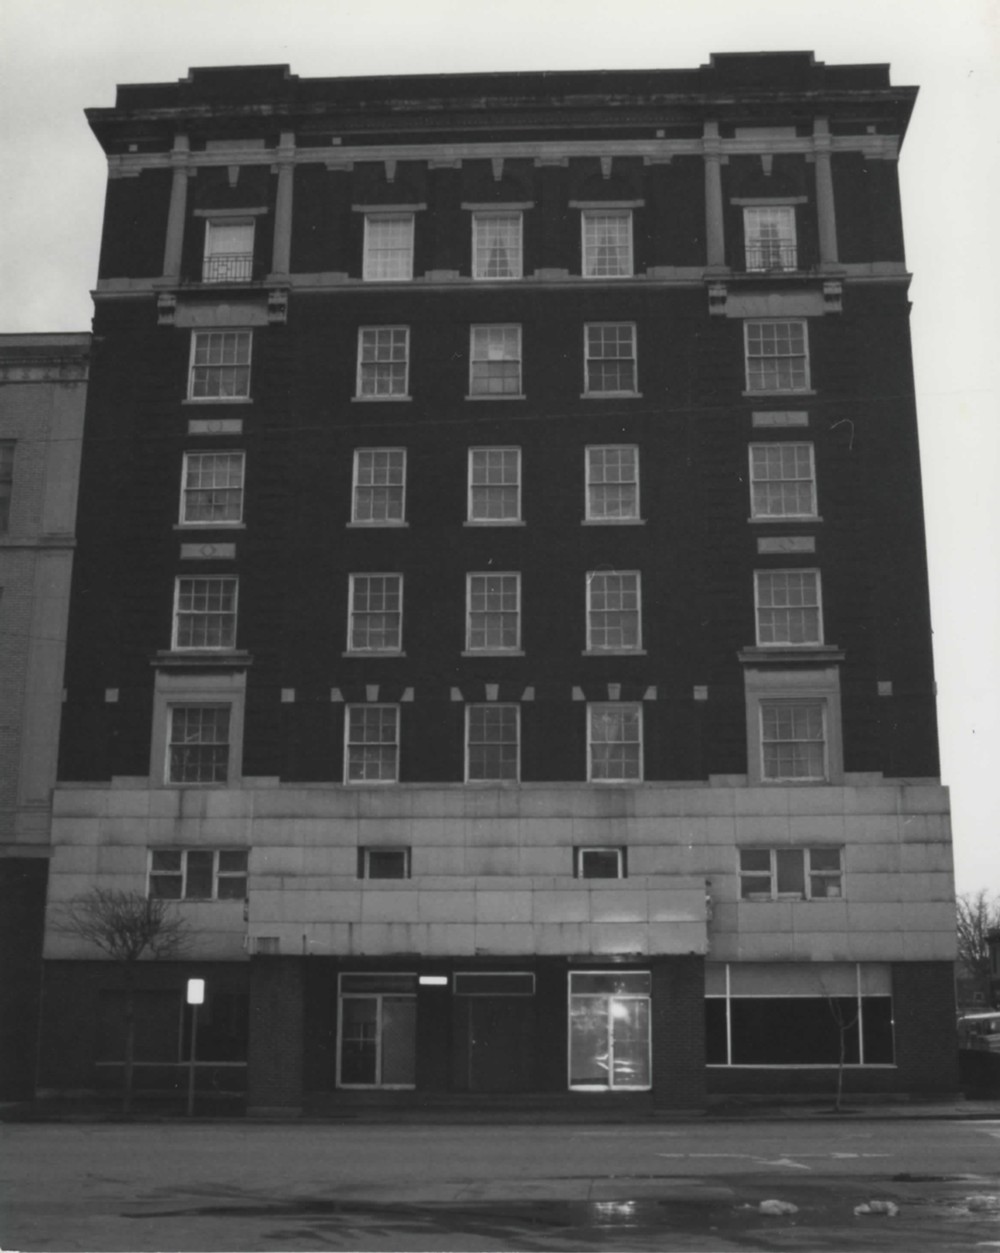 Marting Hotel, Ironton Ohio North elevation - Park Avenue entrance (1998)